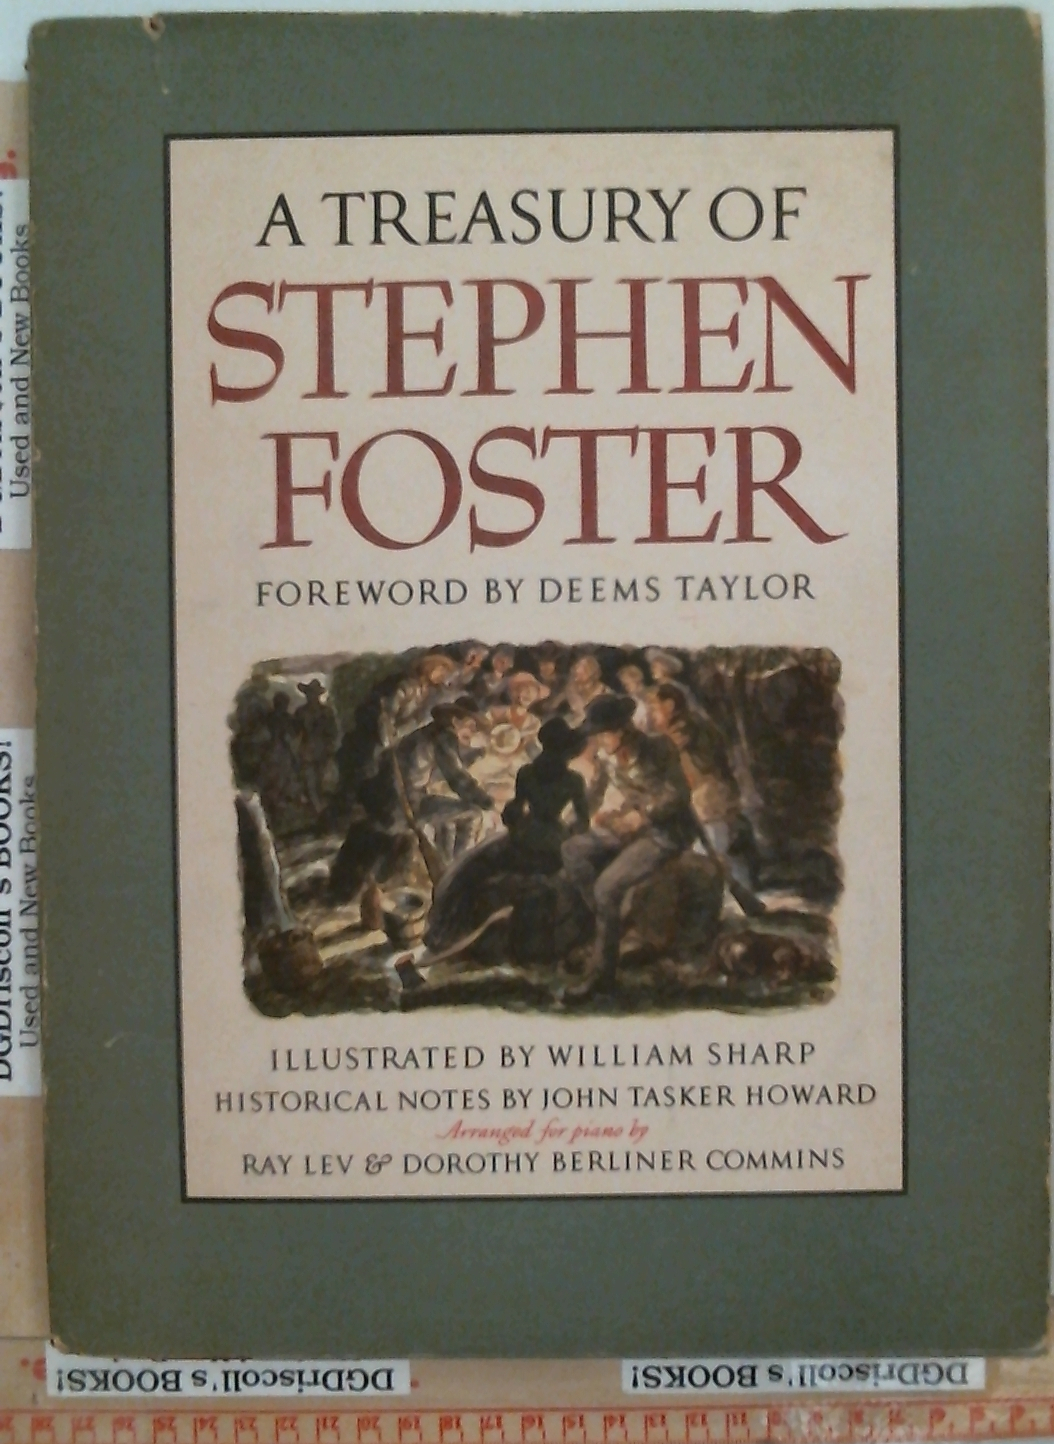 A Treasury of Stephen Foster